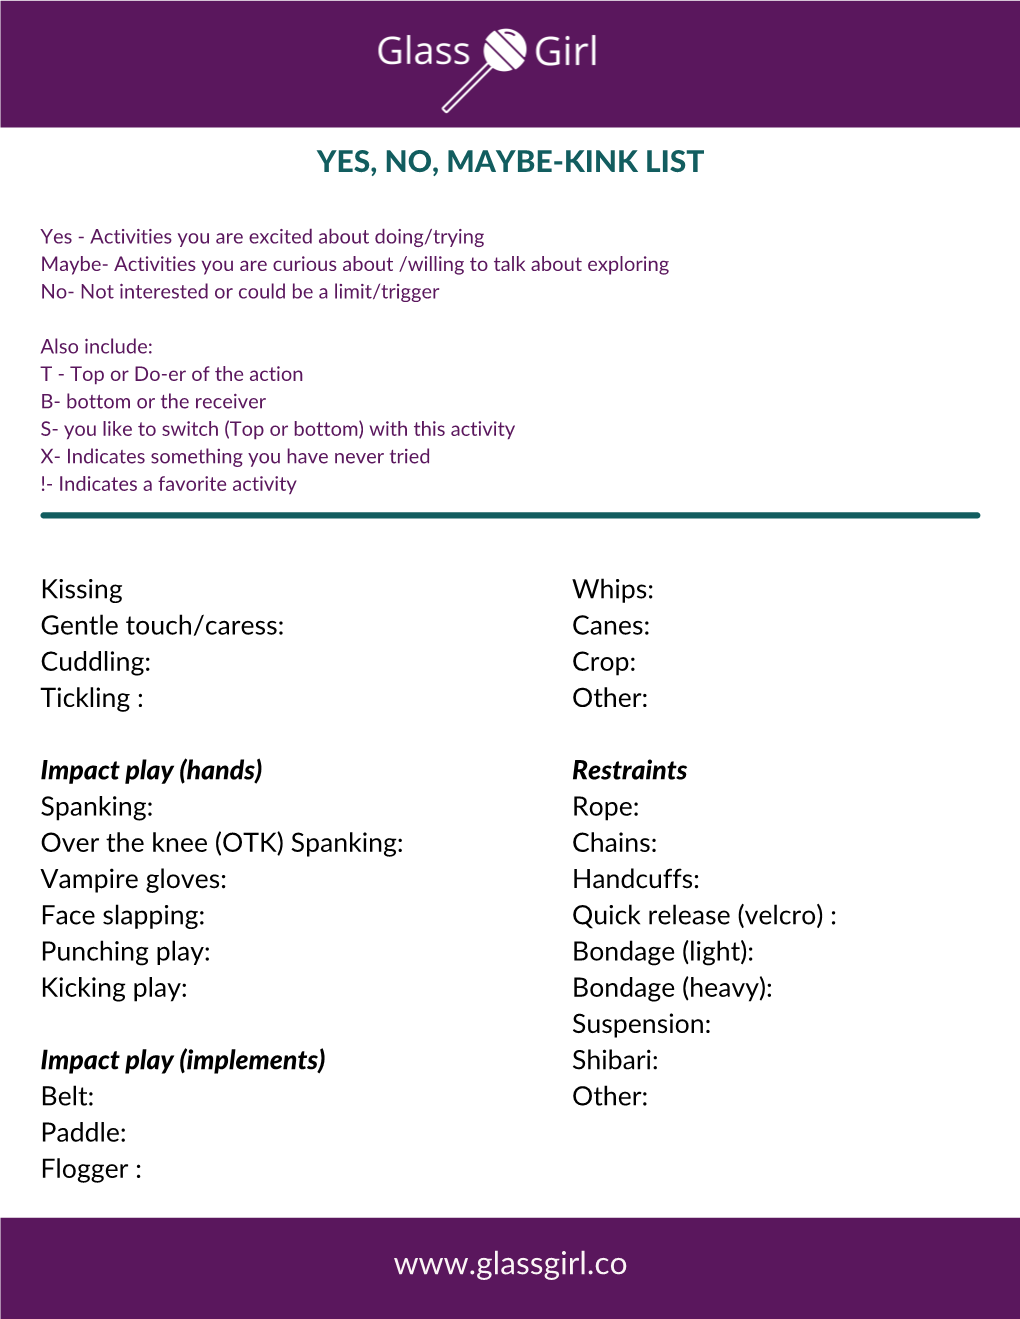 kink list checklist template